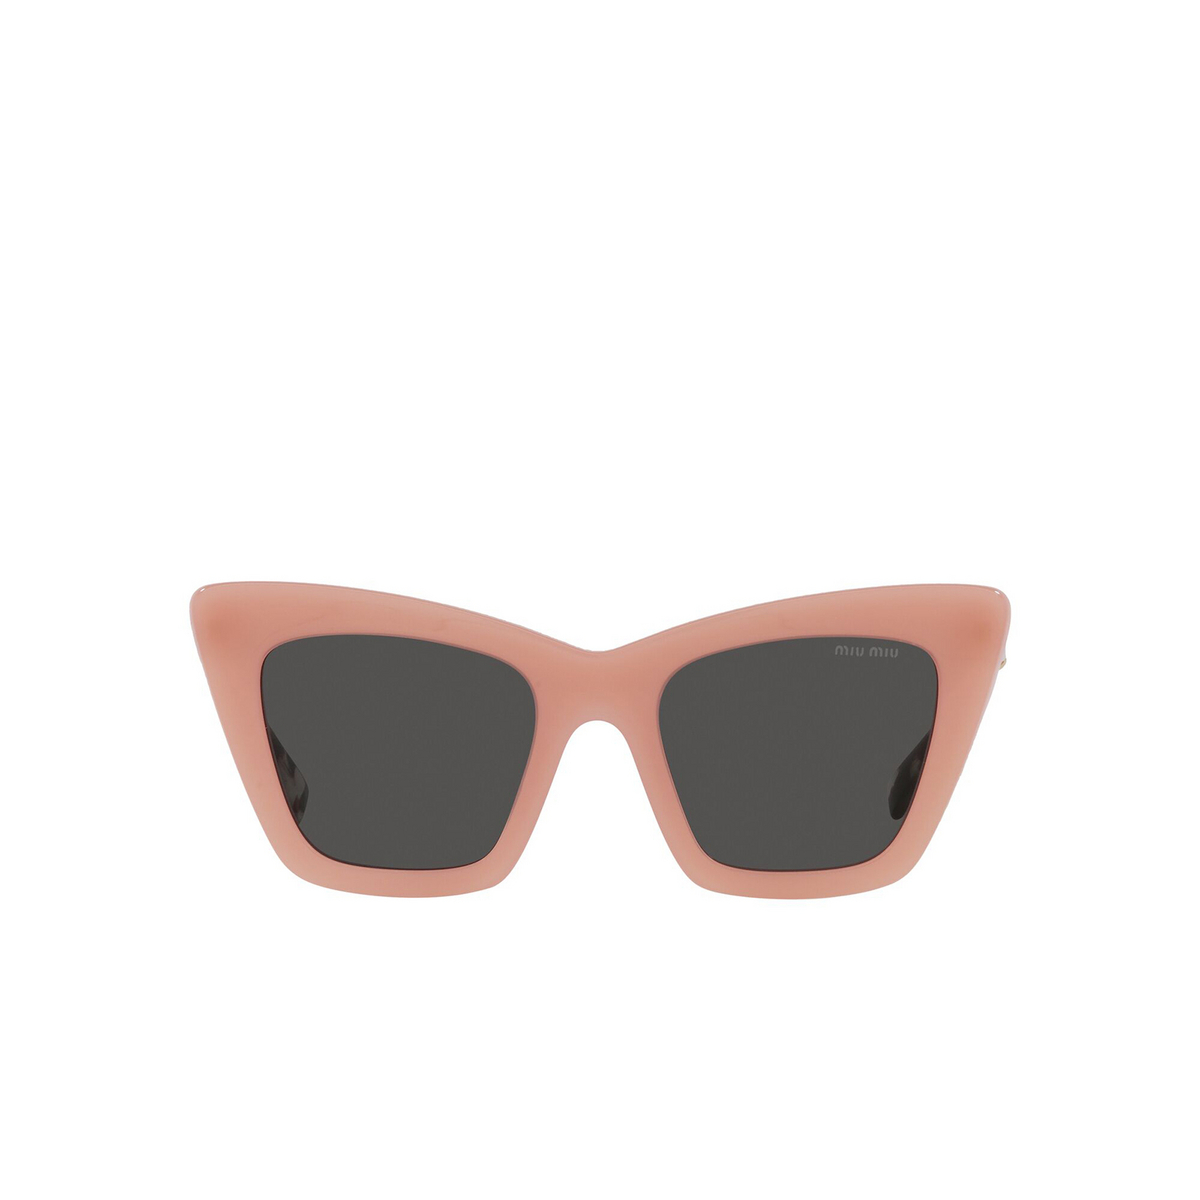 Miu Miu® Cat-eye Sunglasses: MU 01WS color Opal Pink 06X5S0 - front view.